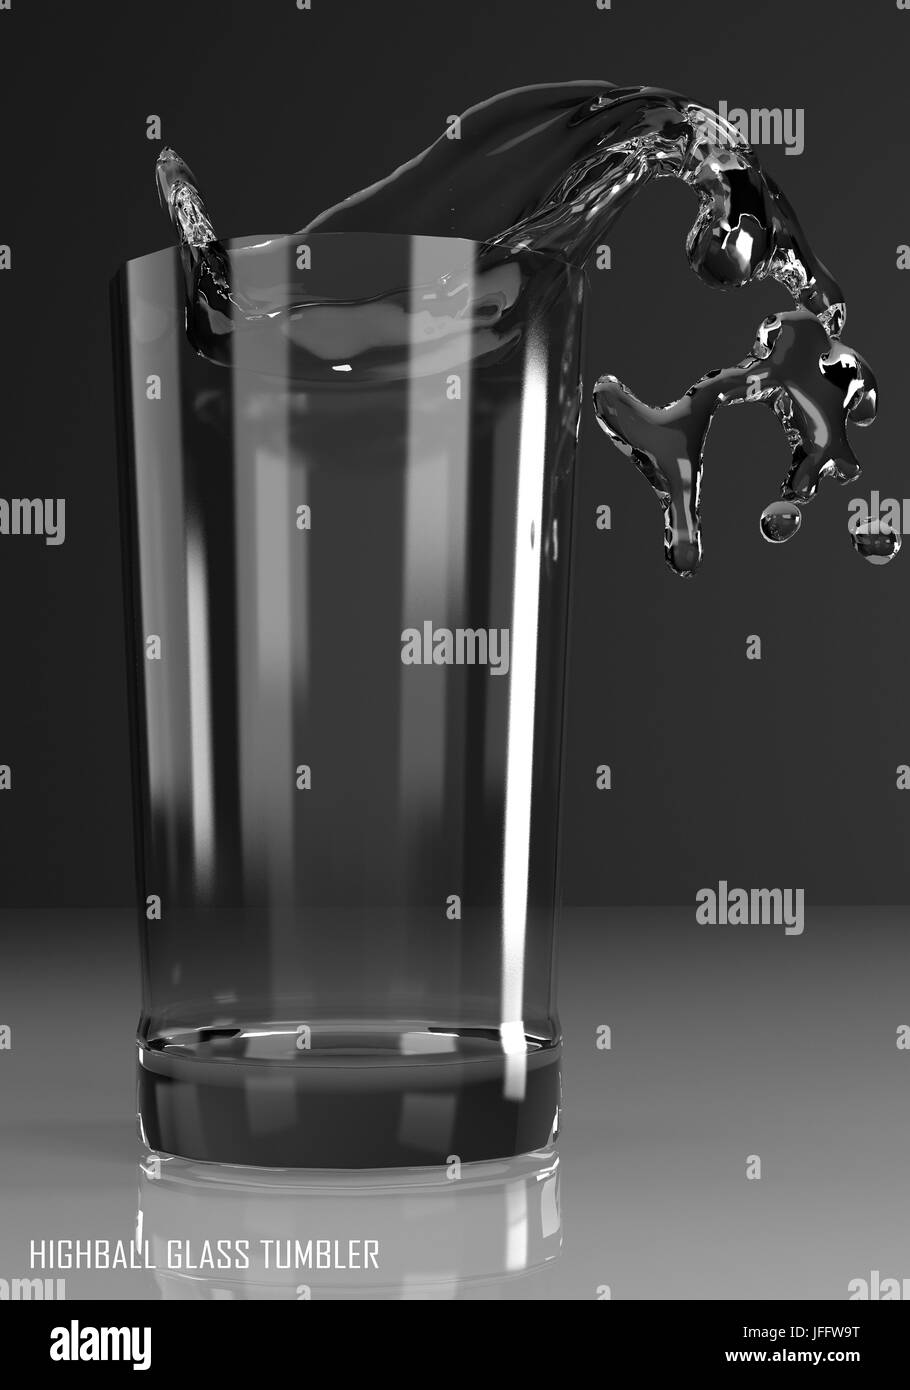 https://c8.alamy.com/comp/JFFW9T/highball-glass-tumbler-3d-illustration-on-dark-background-JFFW9T.jpg